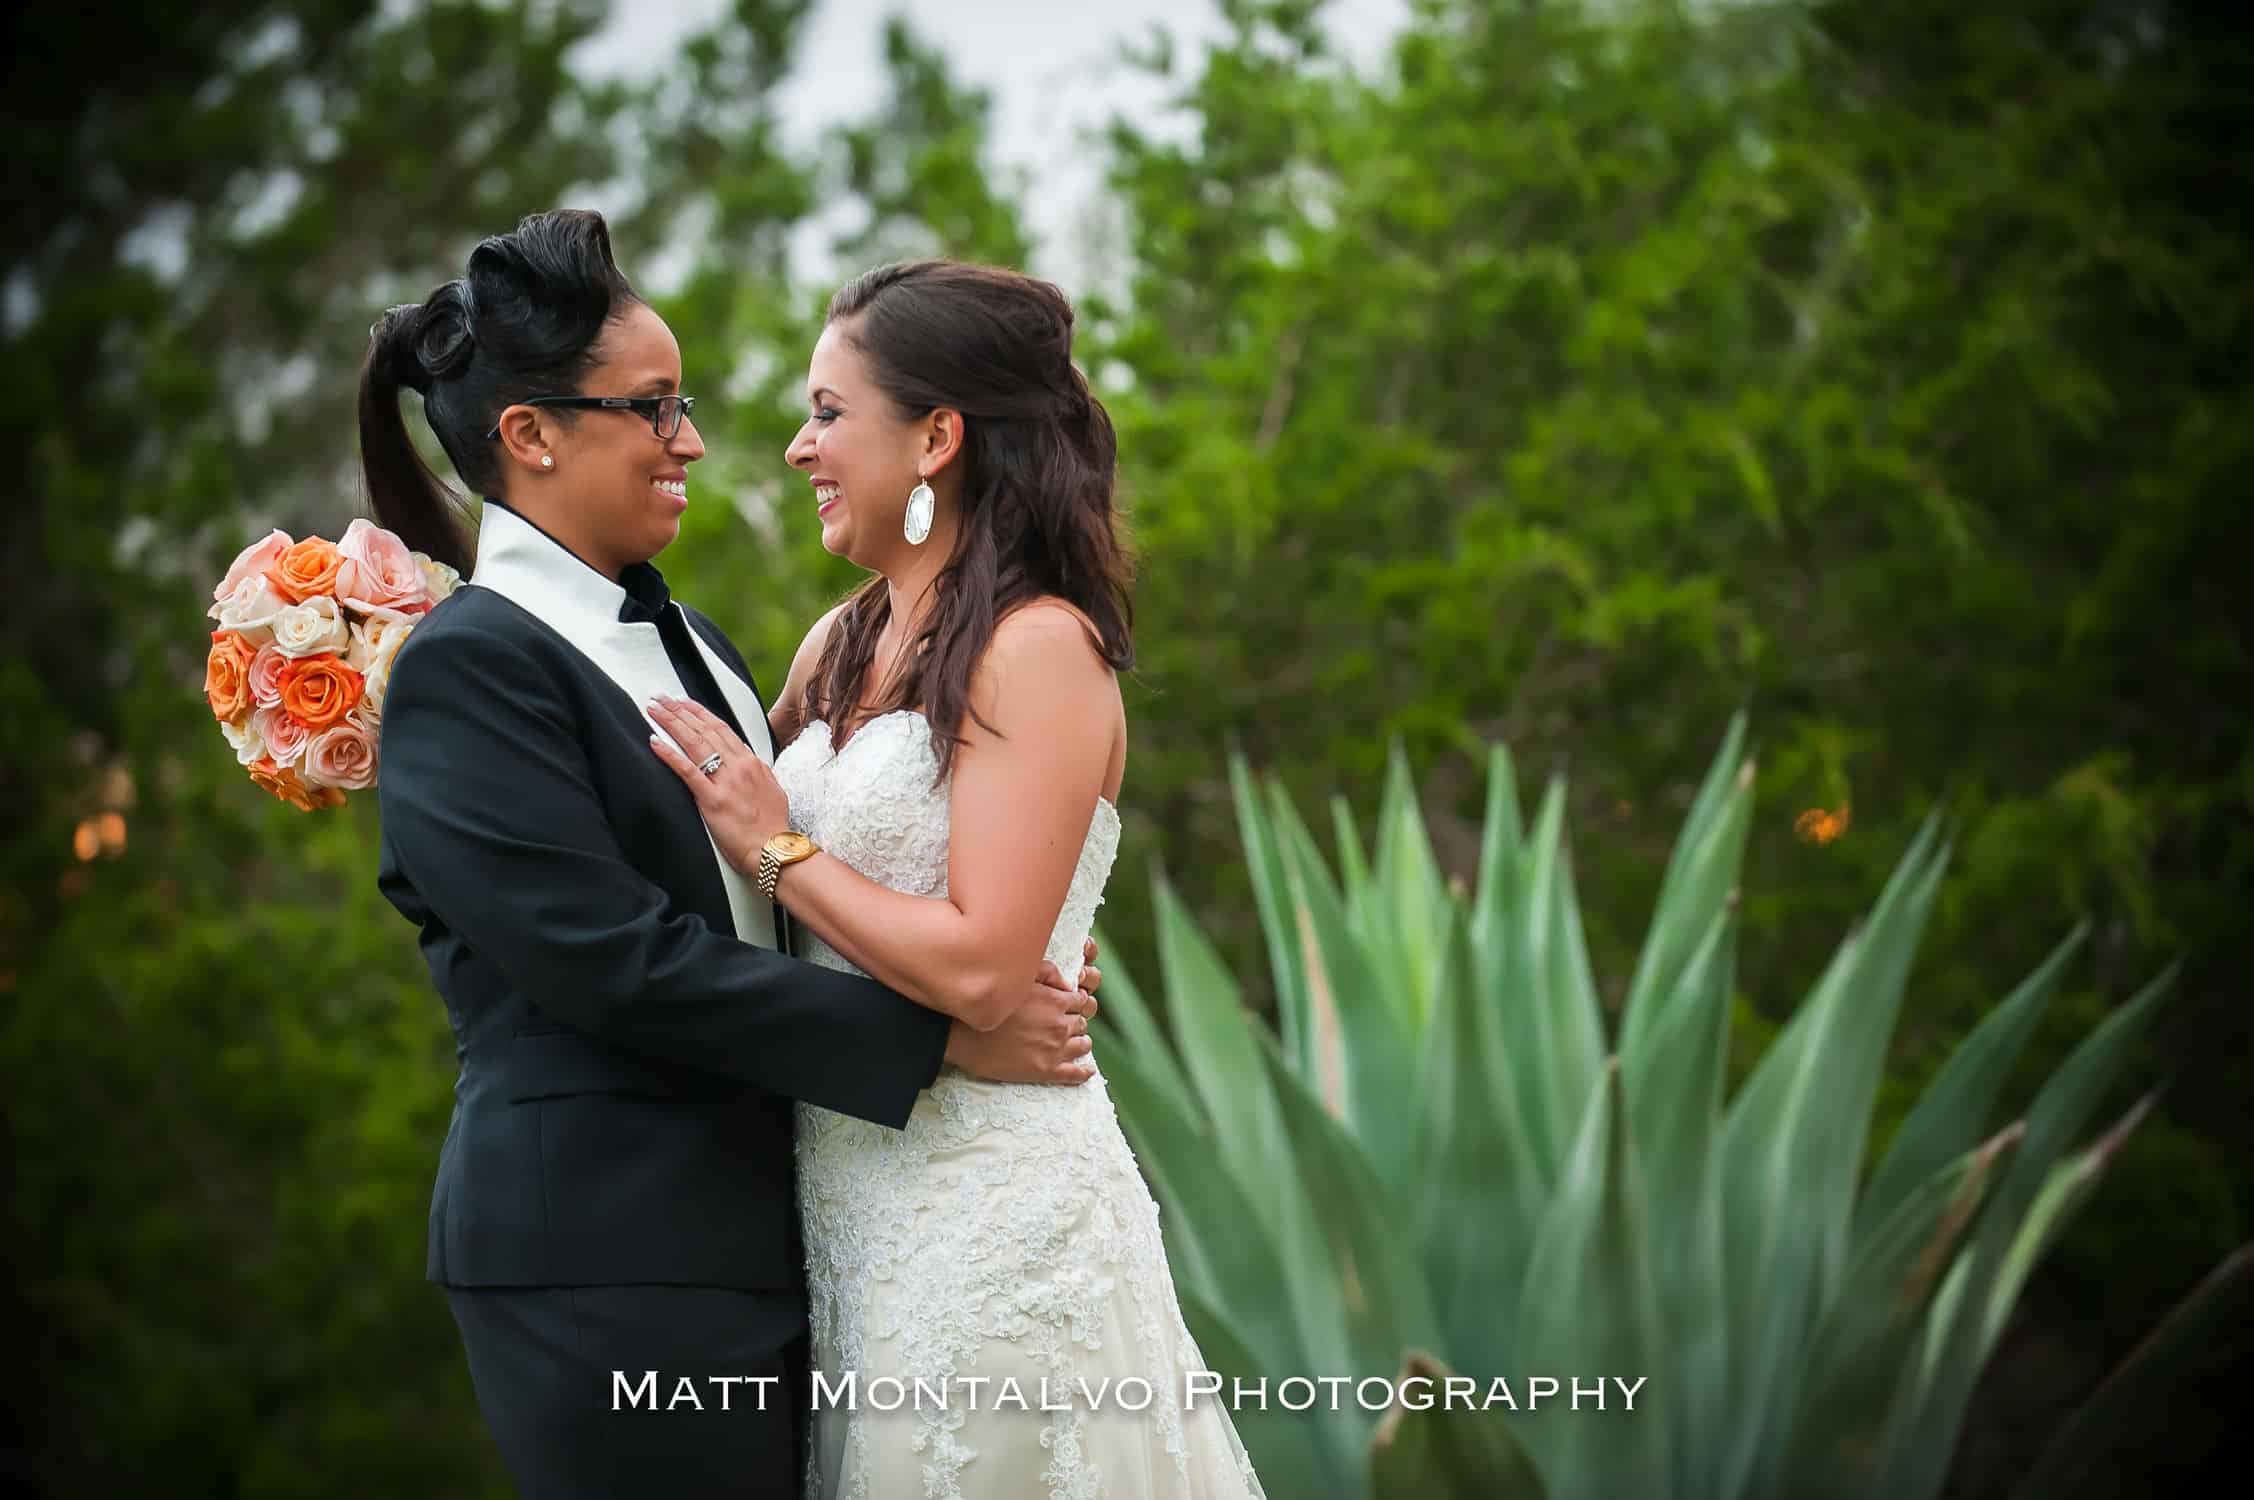 Same Sex Wedding Photography 23 Matt Montalvo Photography